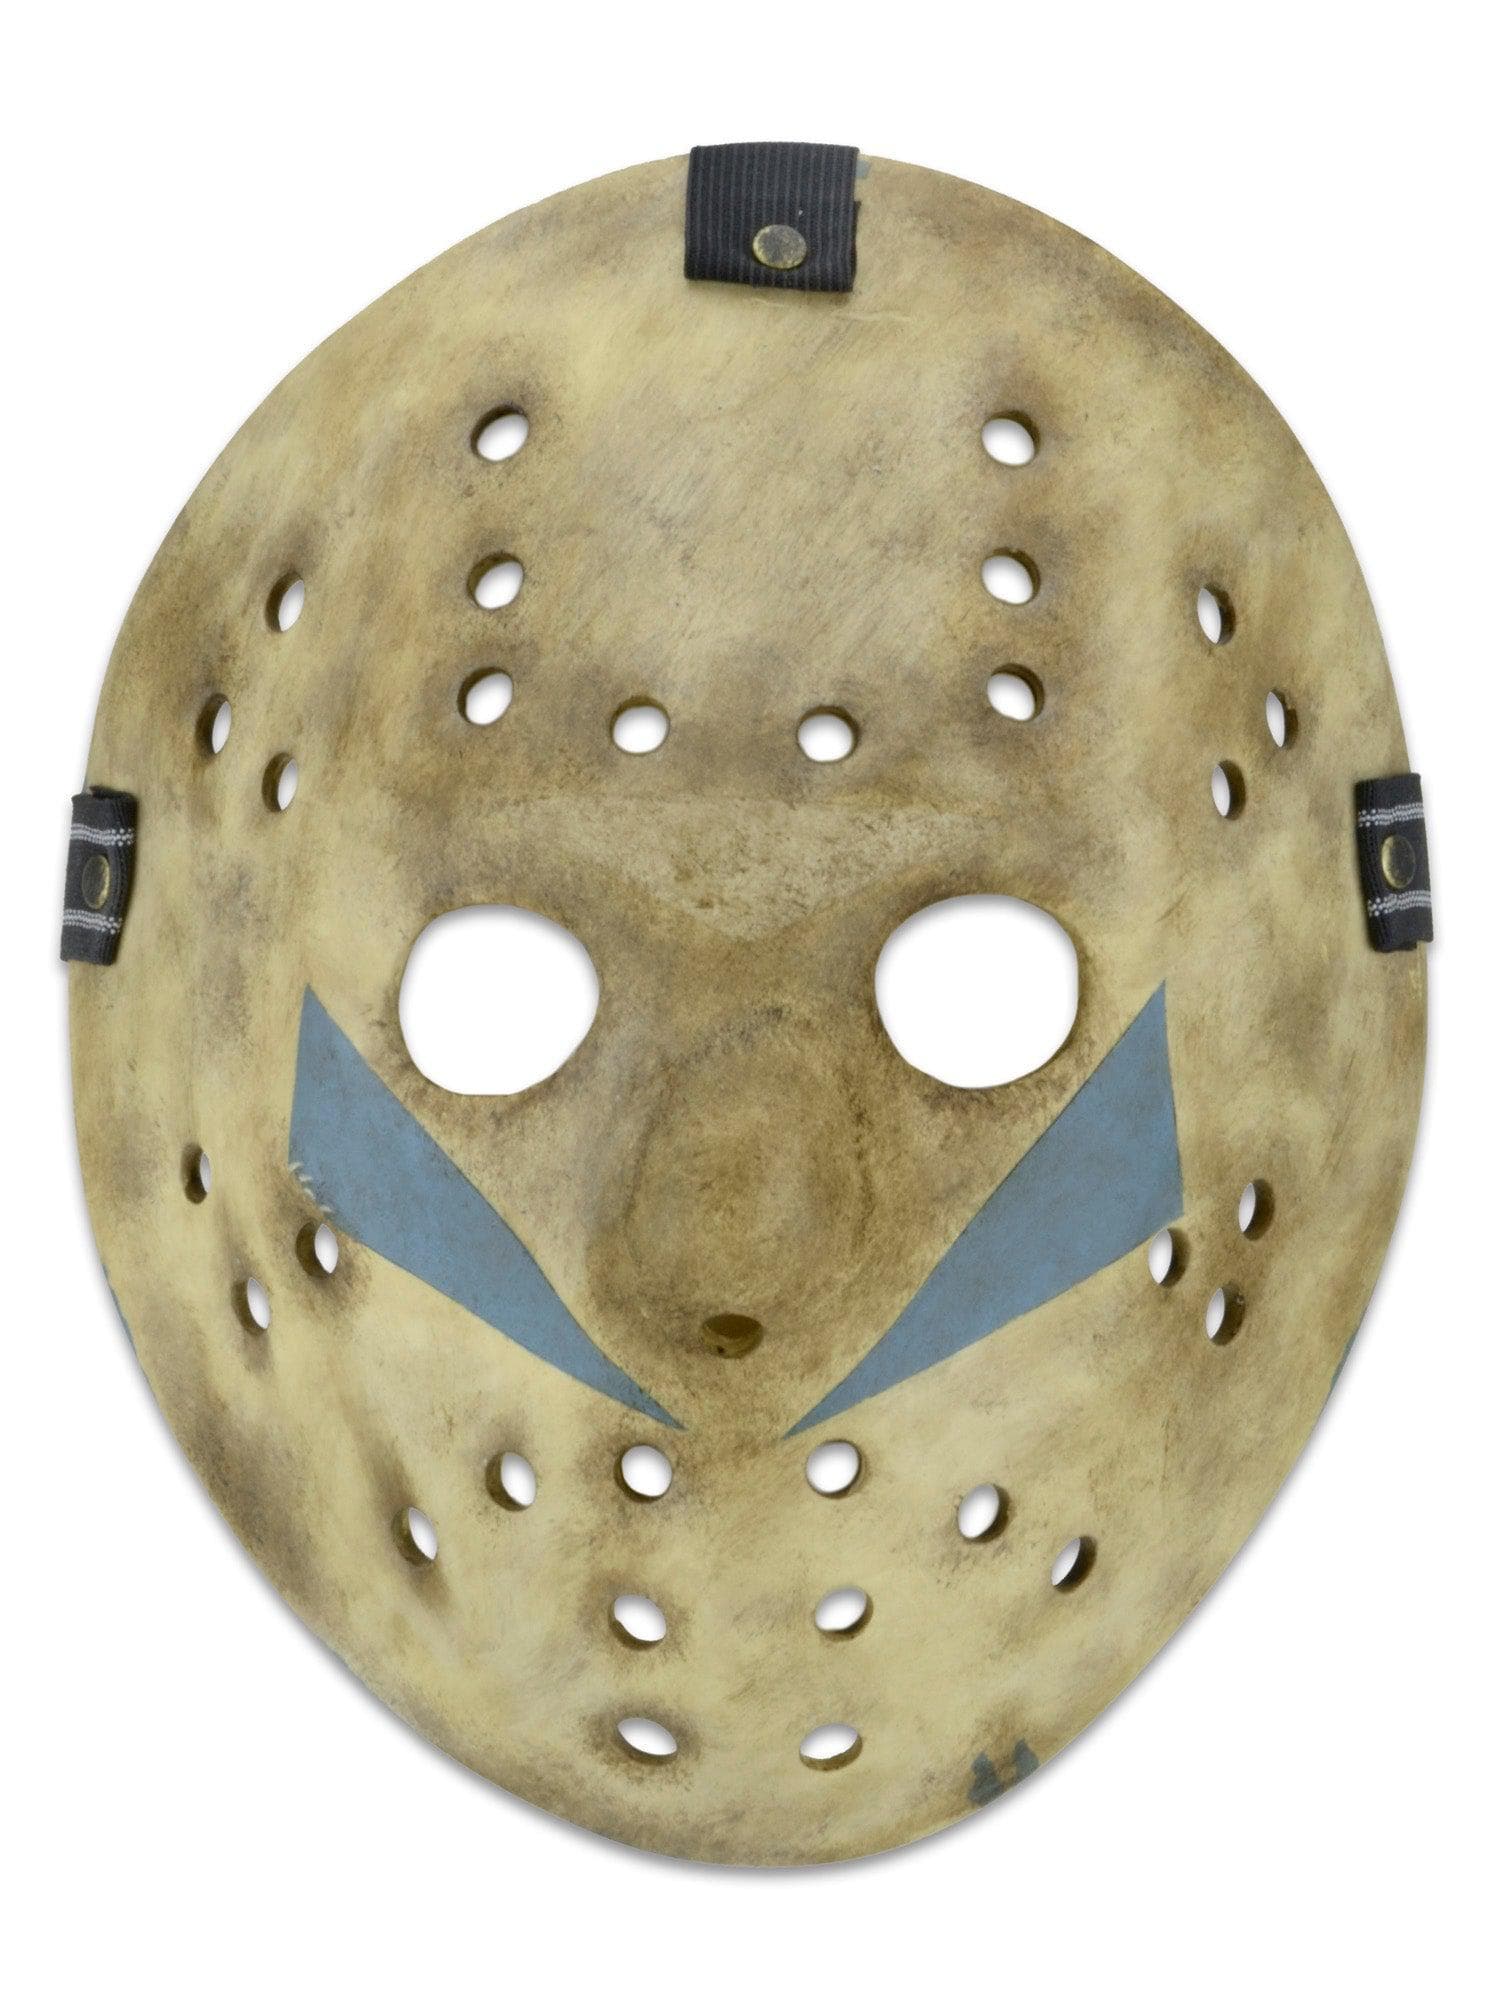 Friday the 13th - Prop Replica - Jason Mask Part 5 - costumes.com